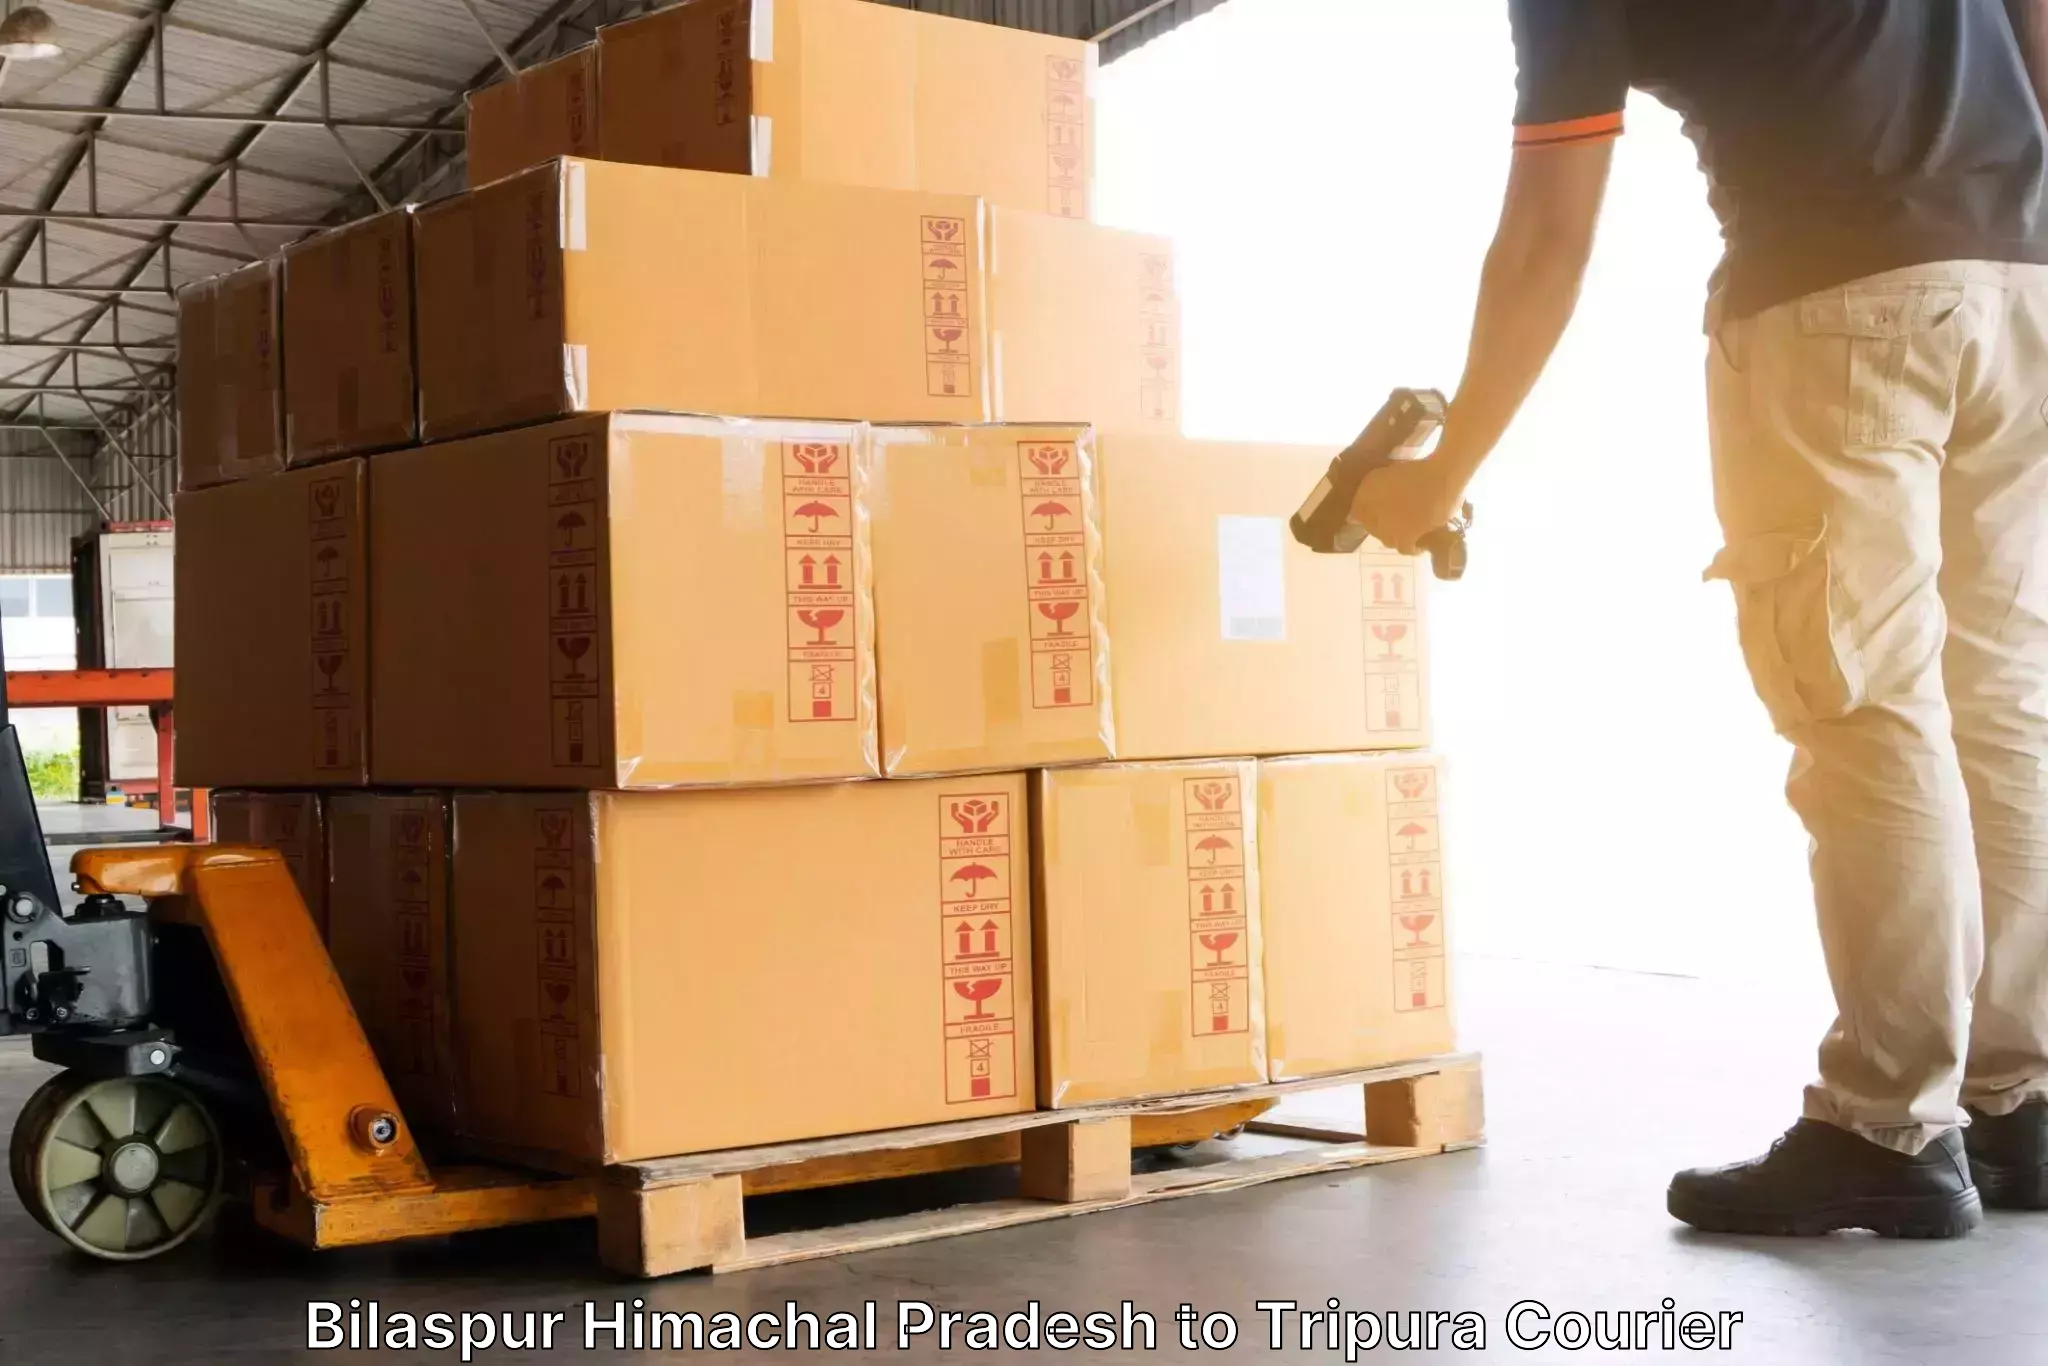 Global parcel delivery Bilaspur Himachal Pradesh to Udaipur Tripura